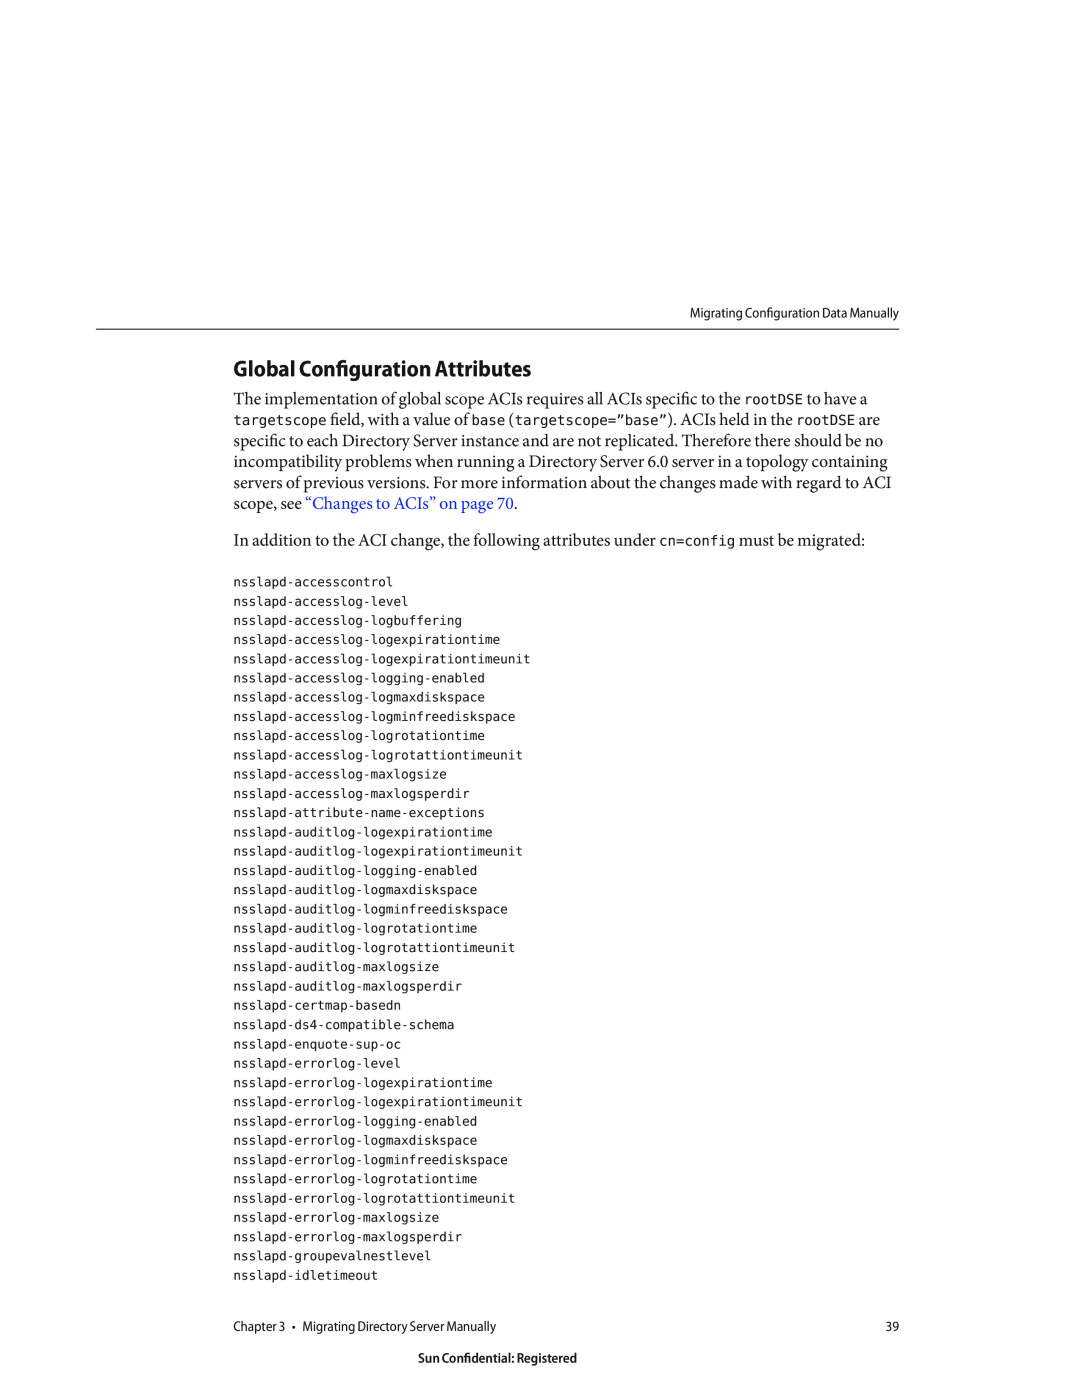 Sun Microsystems 8190994 manual Global Configuration Attributes, Migrating Configuration Data Manually 